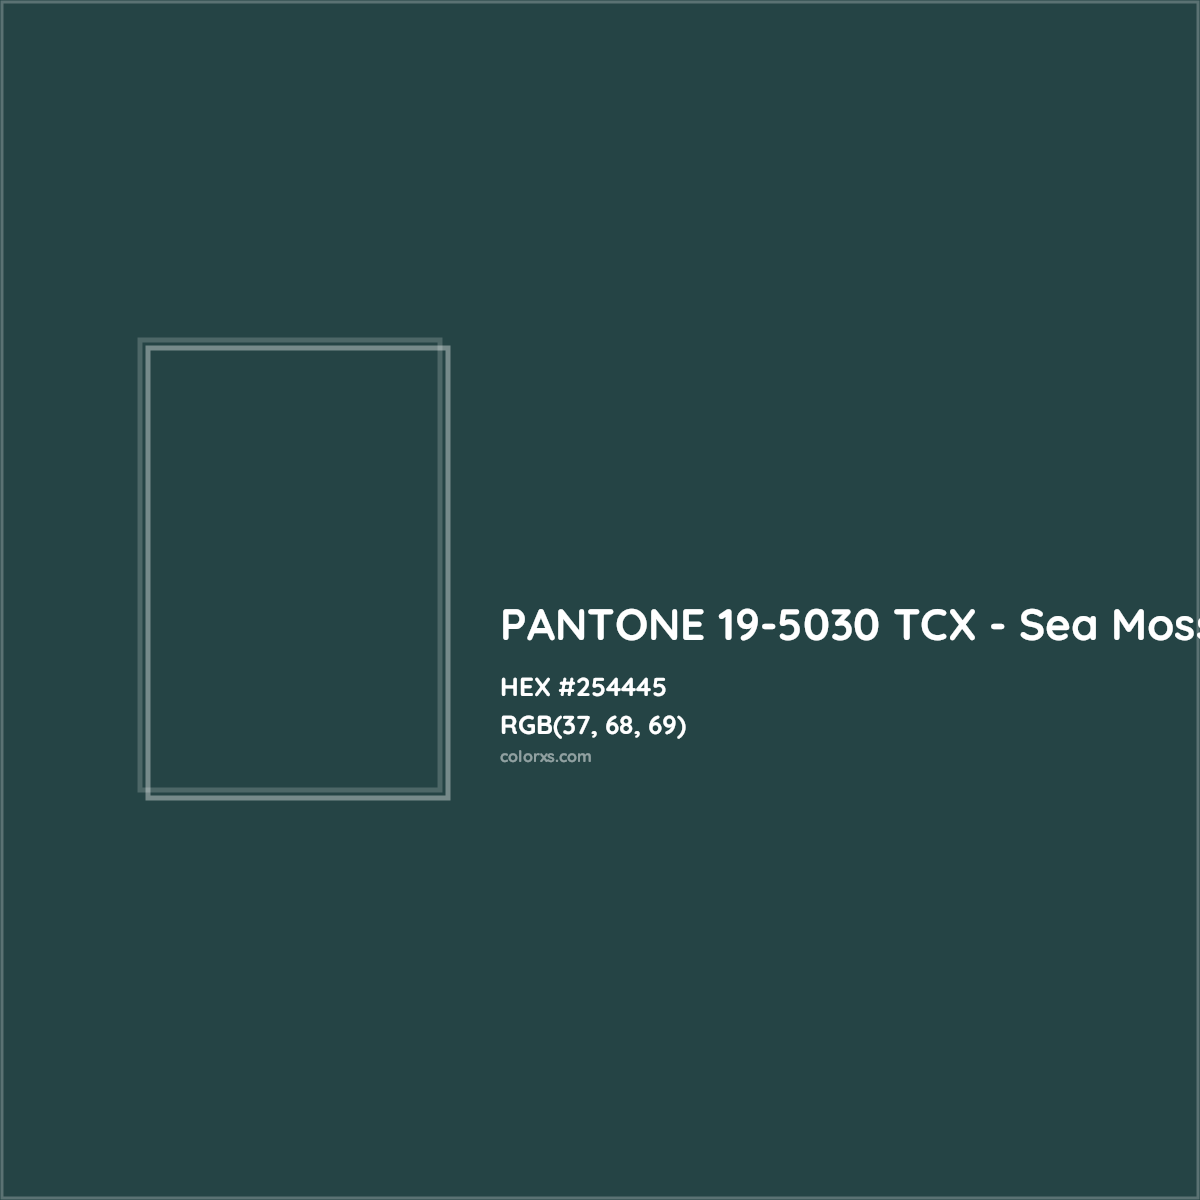 HEX #254445 PANTONE 19-5030 TCX - Sea Moss CMS Pantone TCX - Color Code